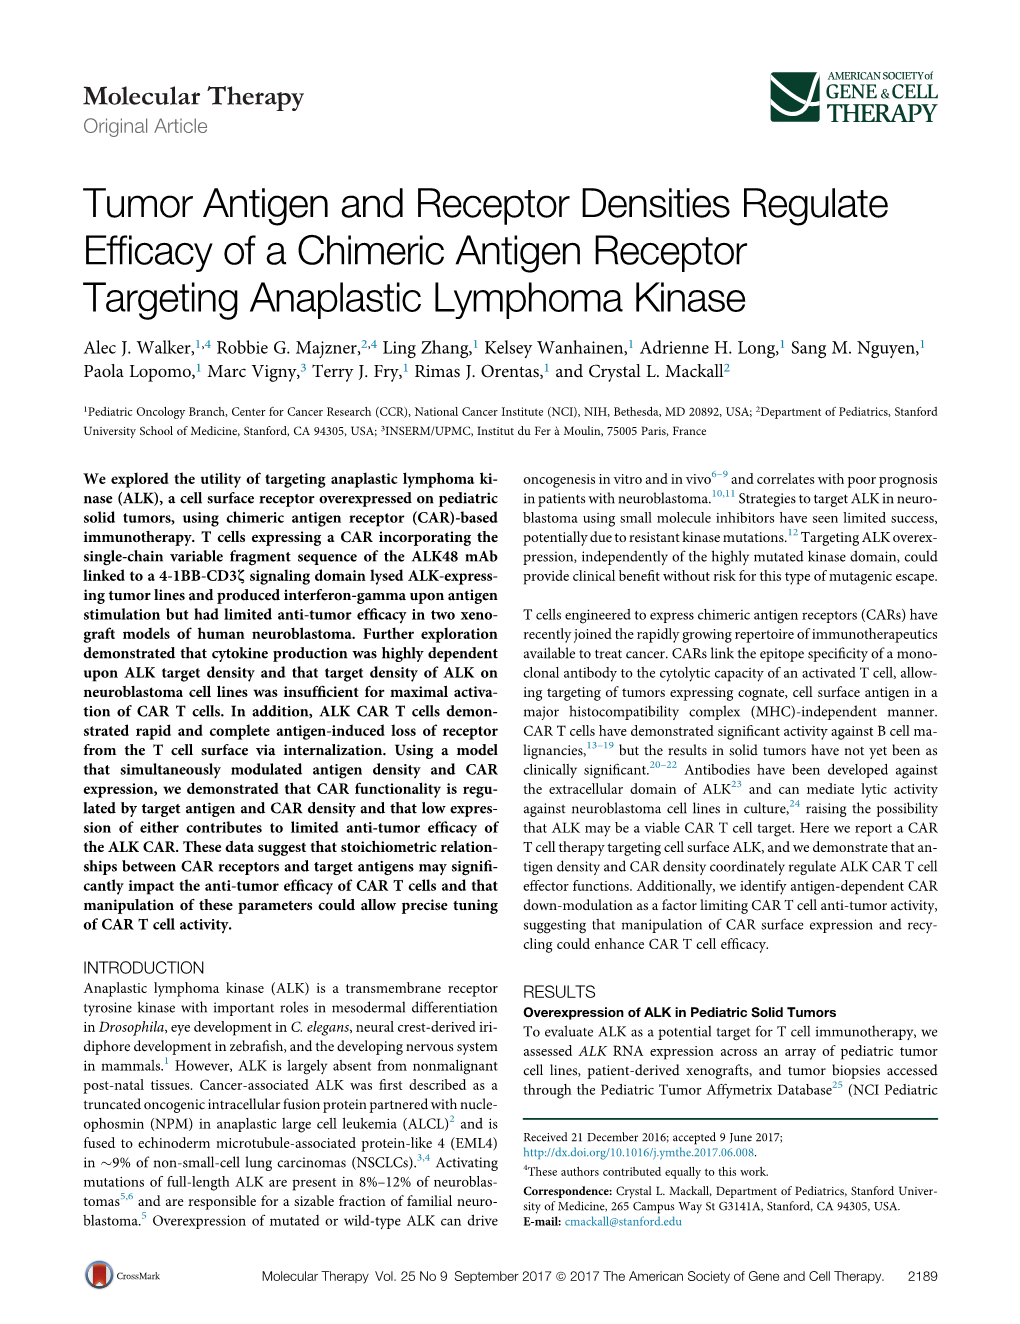 Tumor Antigen and Receptor Densities Regulate Efficacy of A